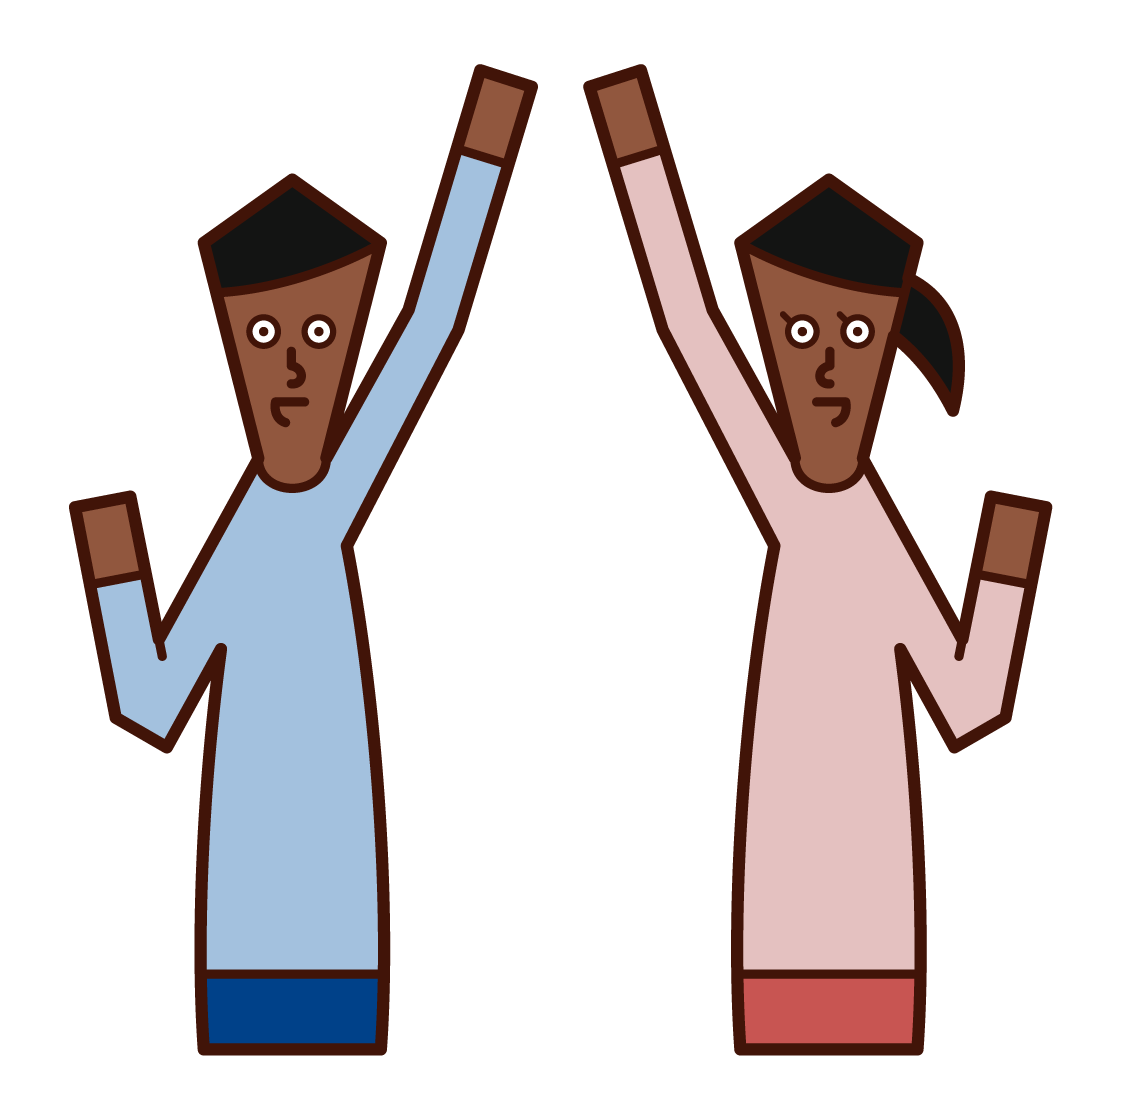 Illustration of people raising fists